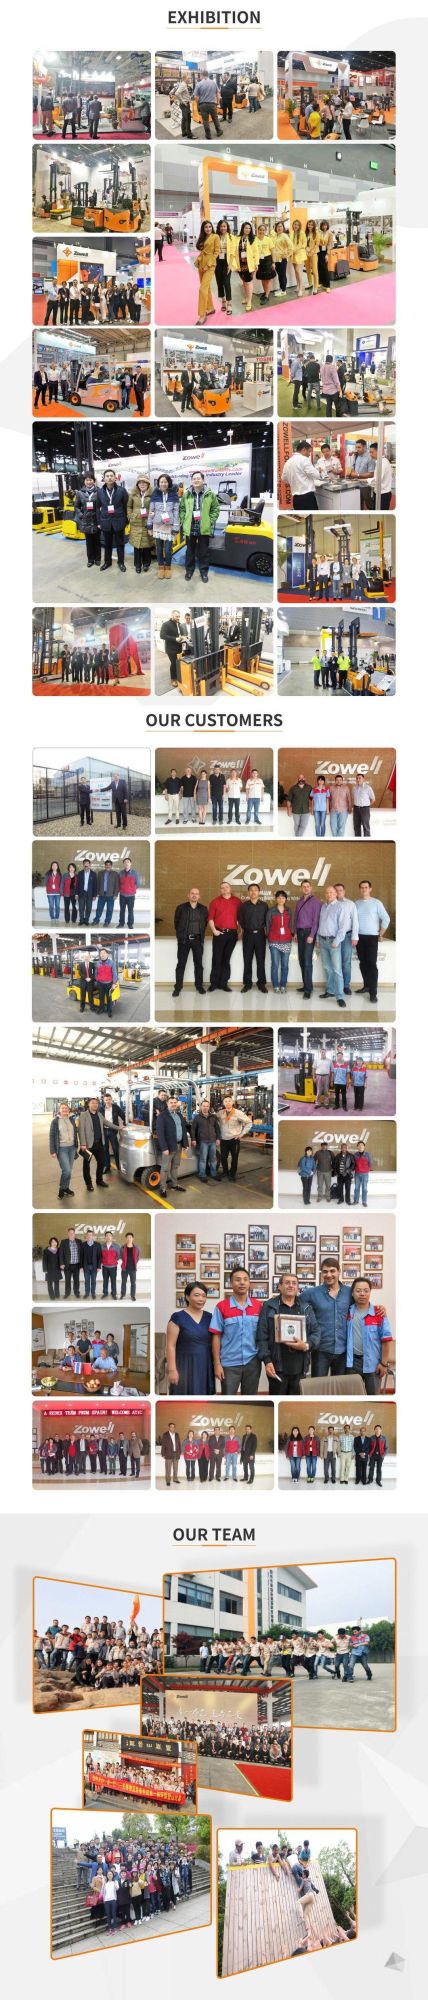 Zowell 230kg 5800~11800mm Lift Height Electric Mobile Scissor Lift Platform Aerial Work